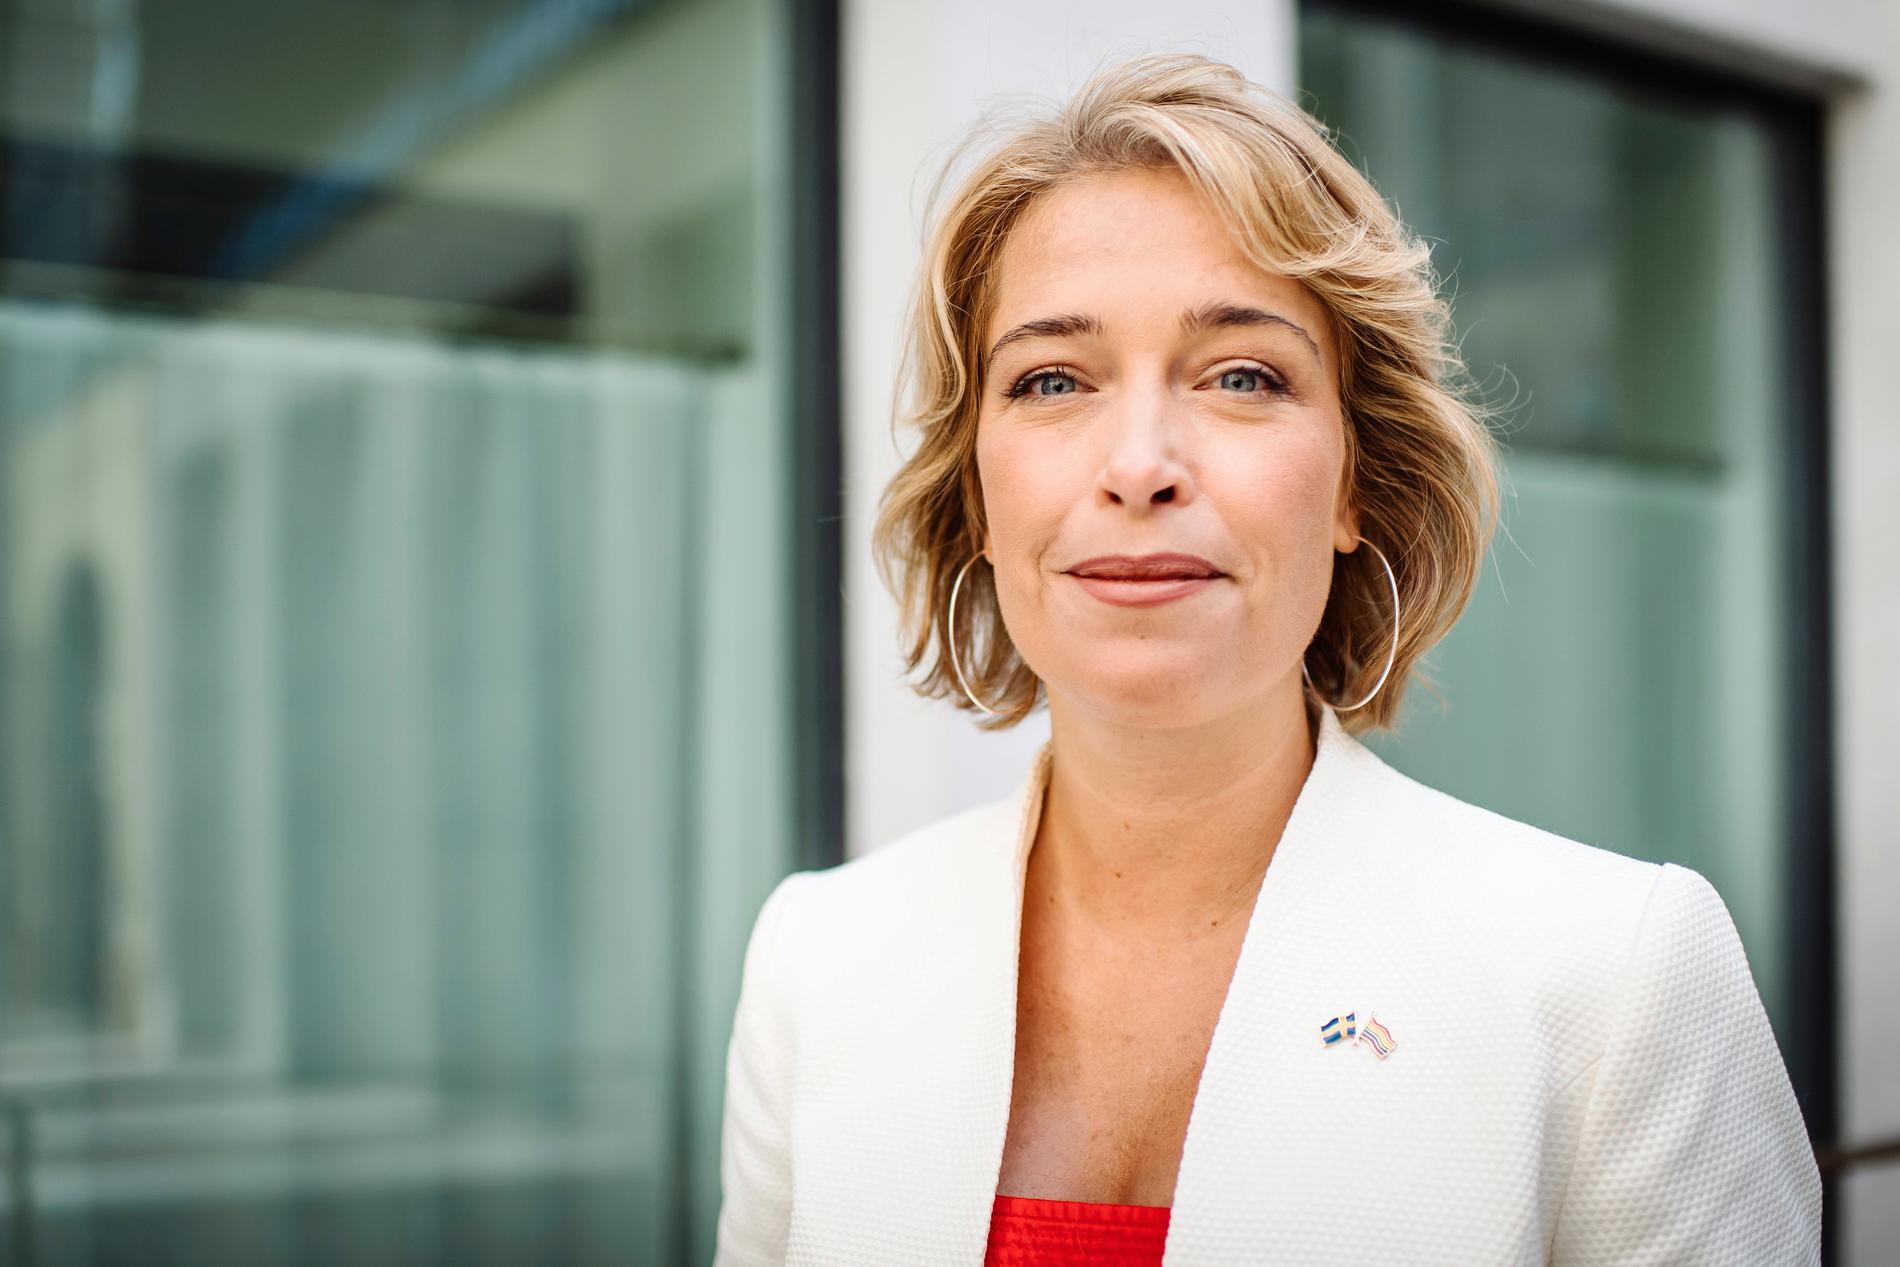 Strandhäll new chairman for S-women